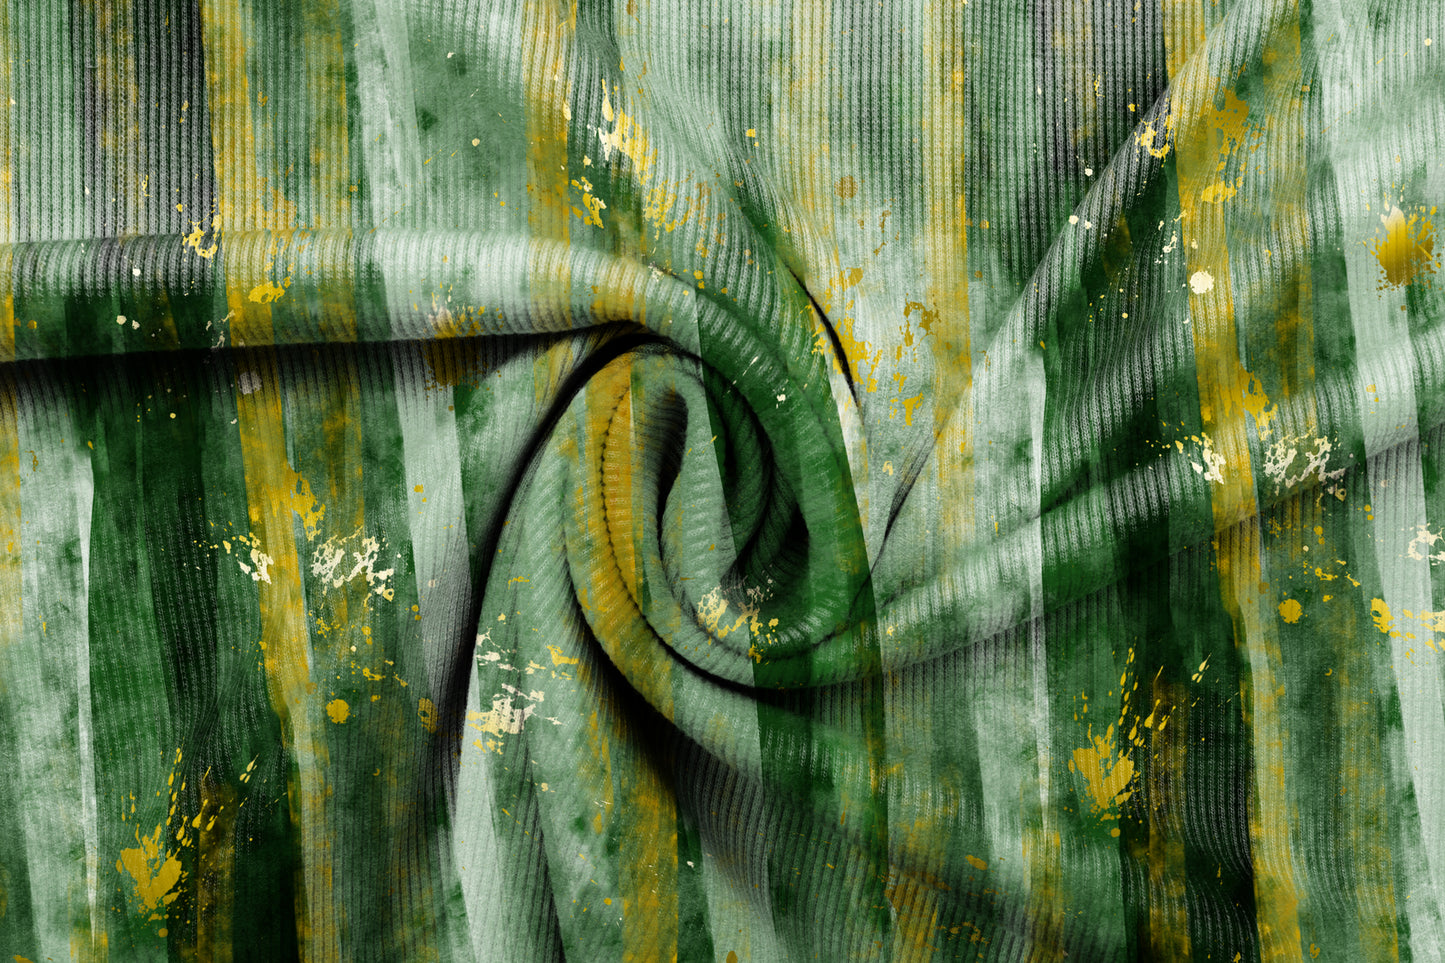 Realistic Fabric Twirl Mock Up